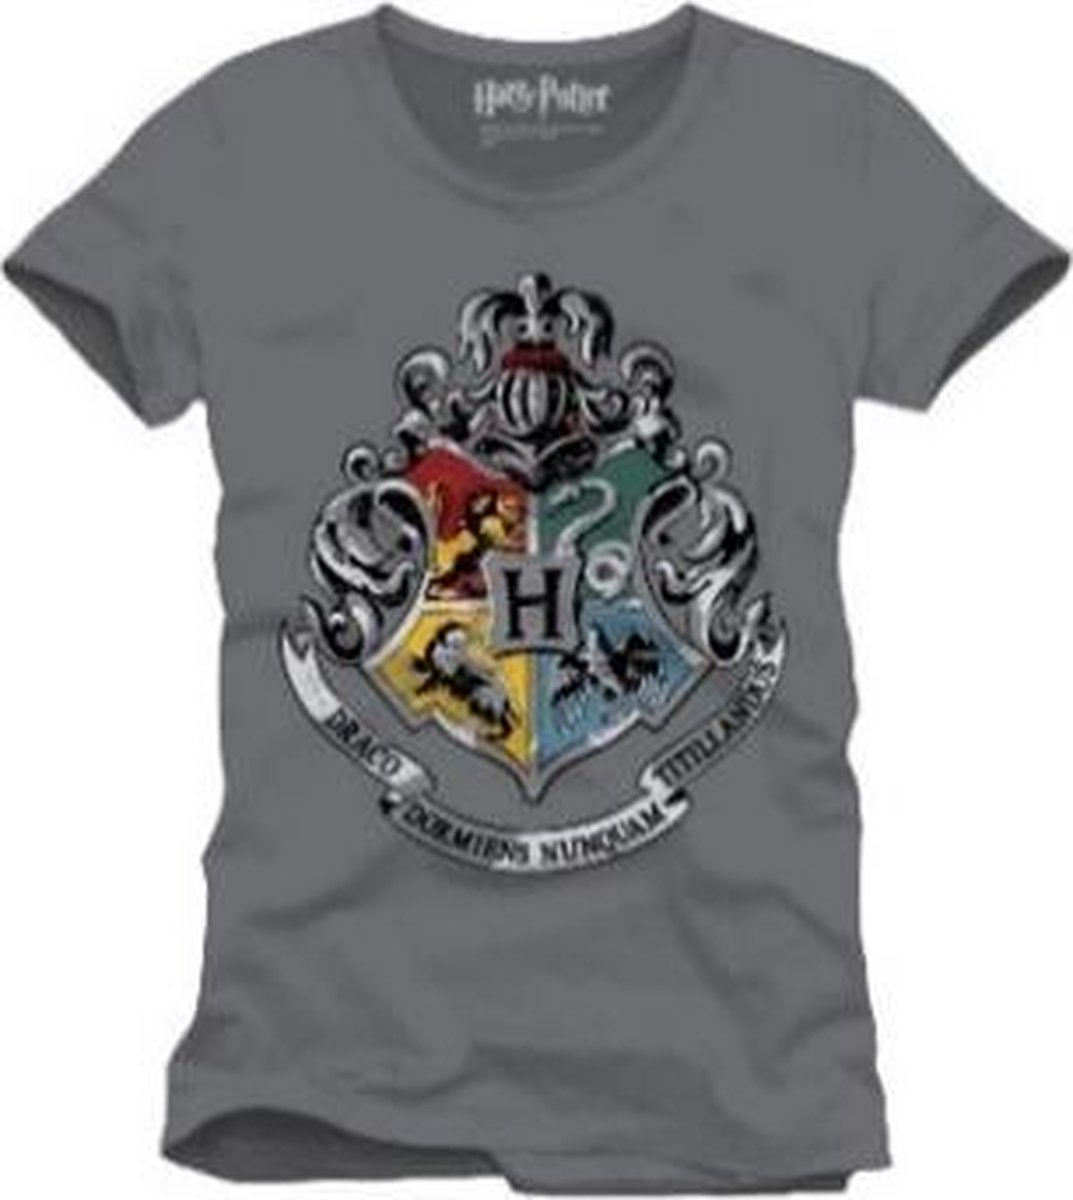 Harry Potter - Hogwarts 4 Houses Crest Anthracite T-Shirt - S